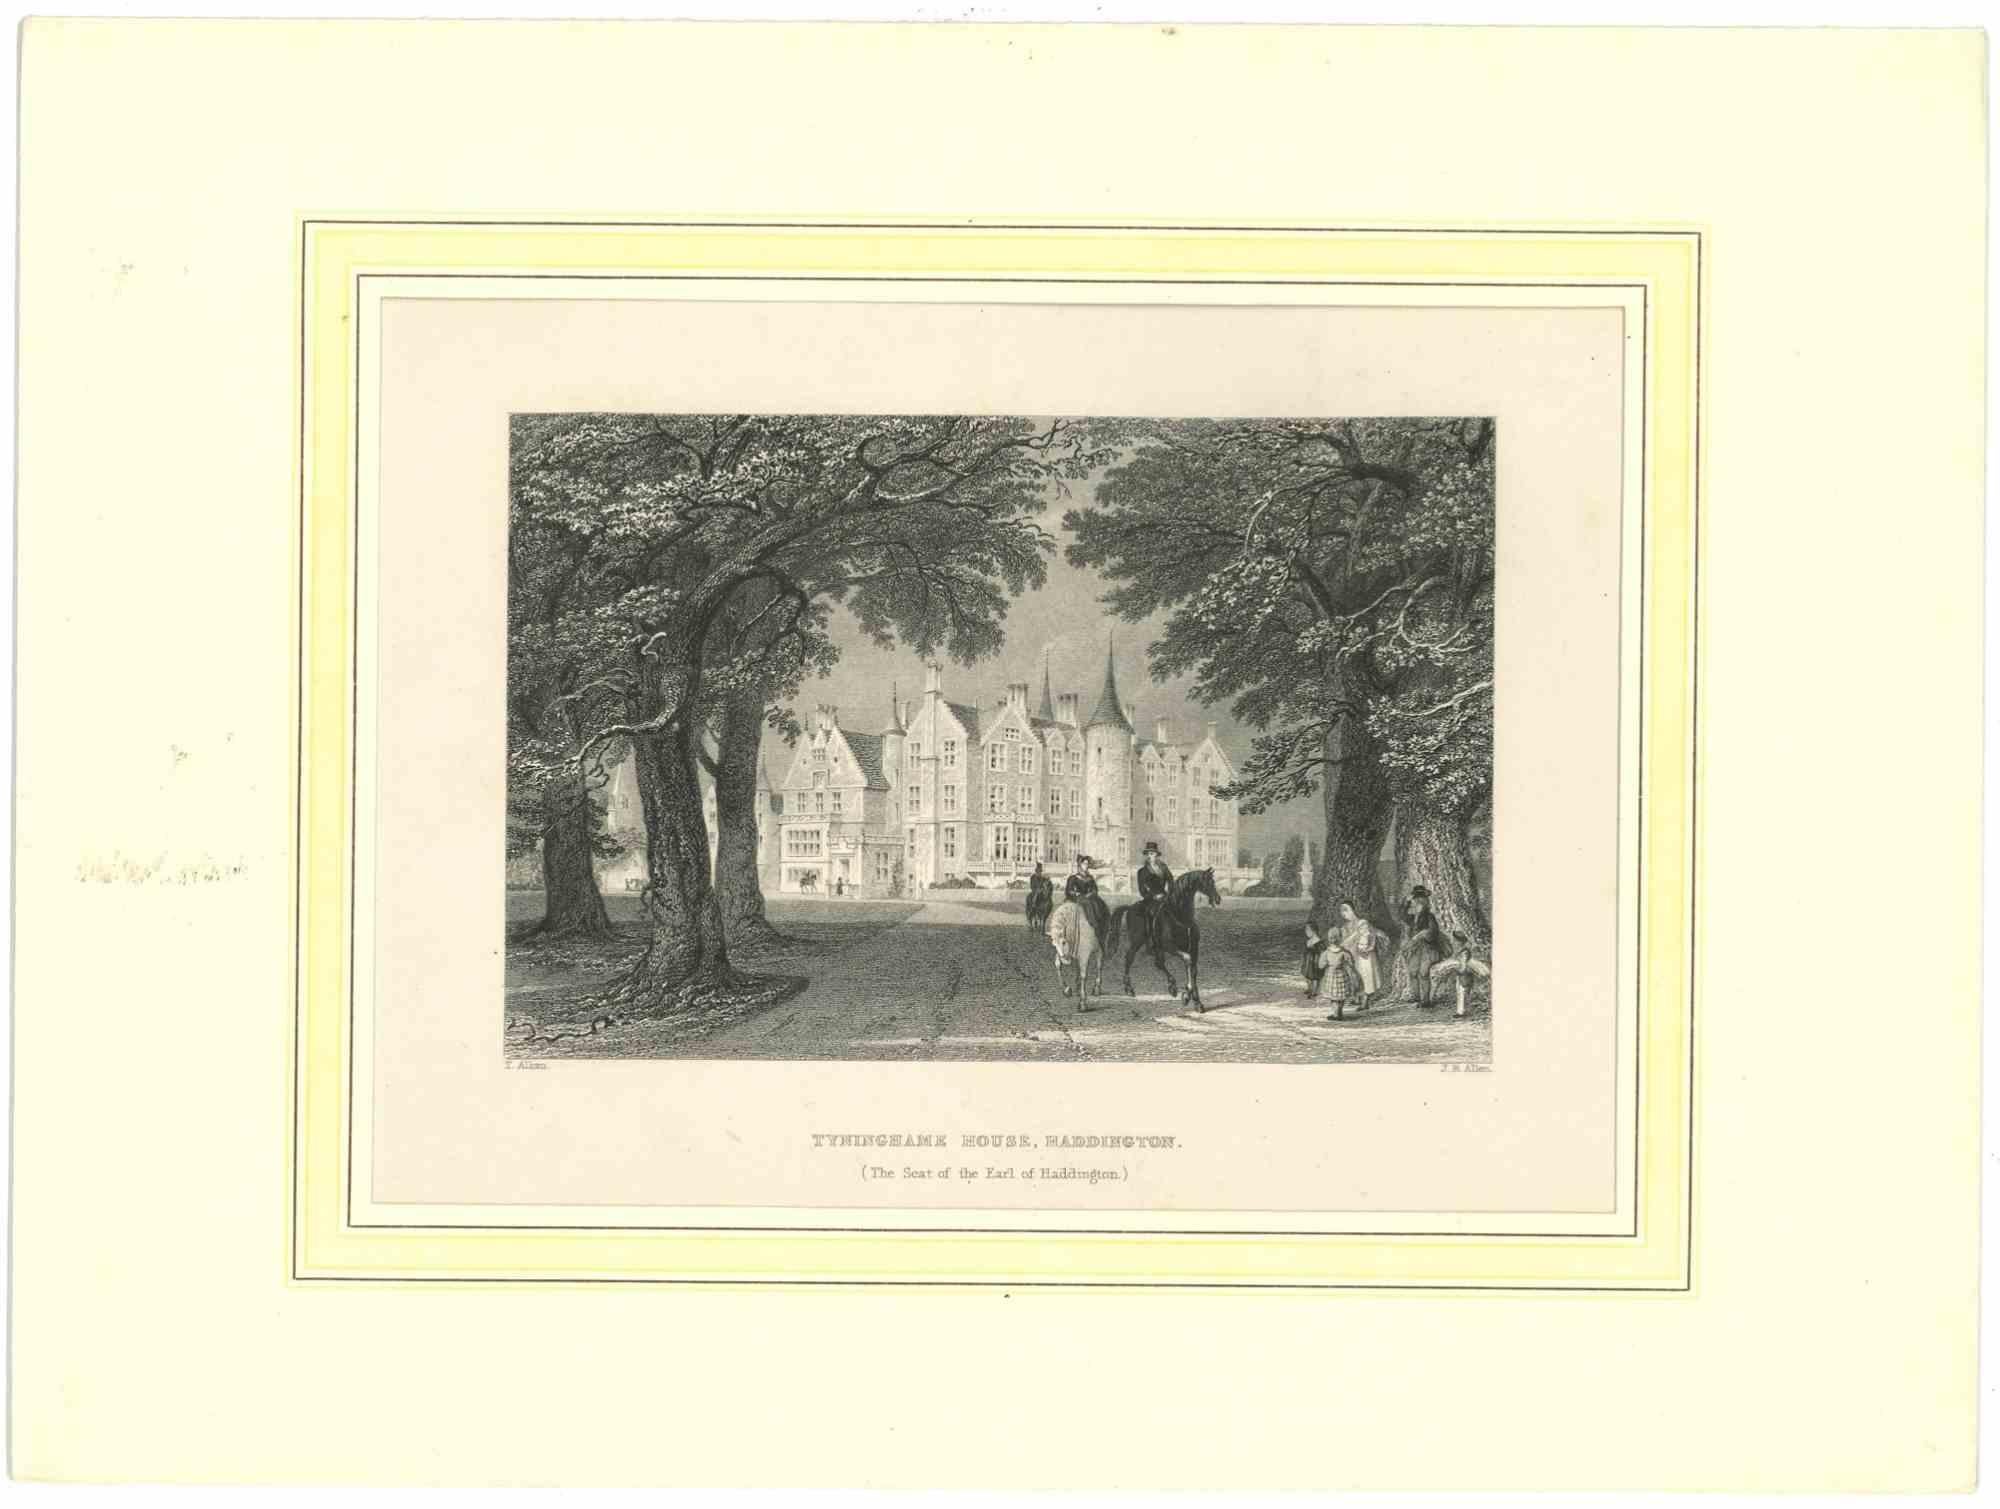 Tyningame House, Haddington - Original Lithograph - Mid-19th Century